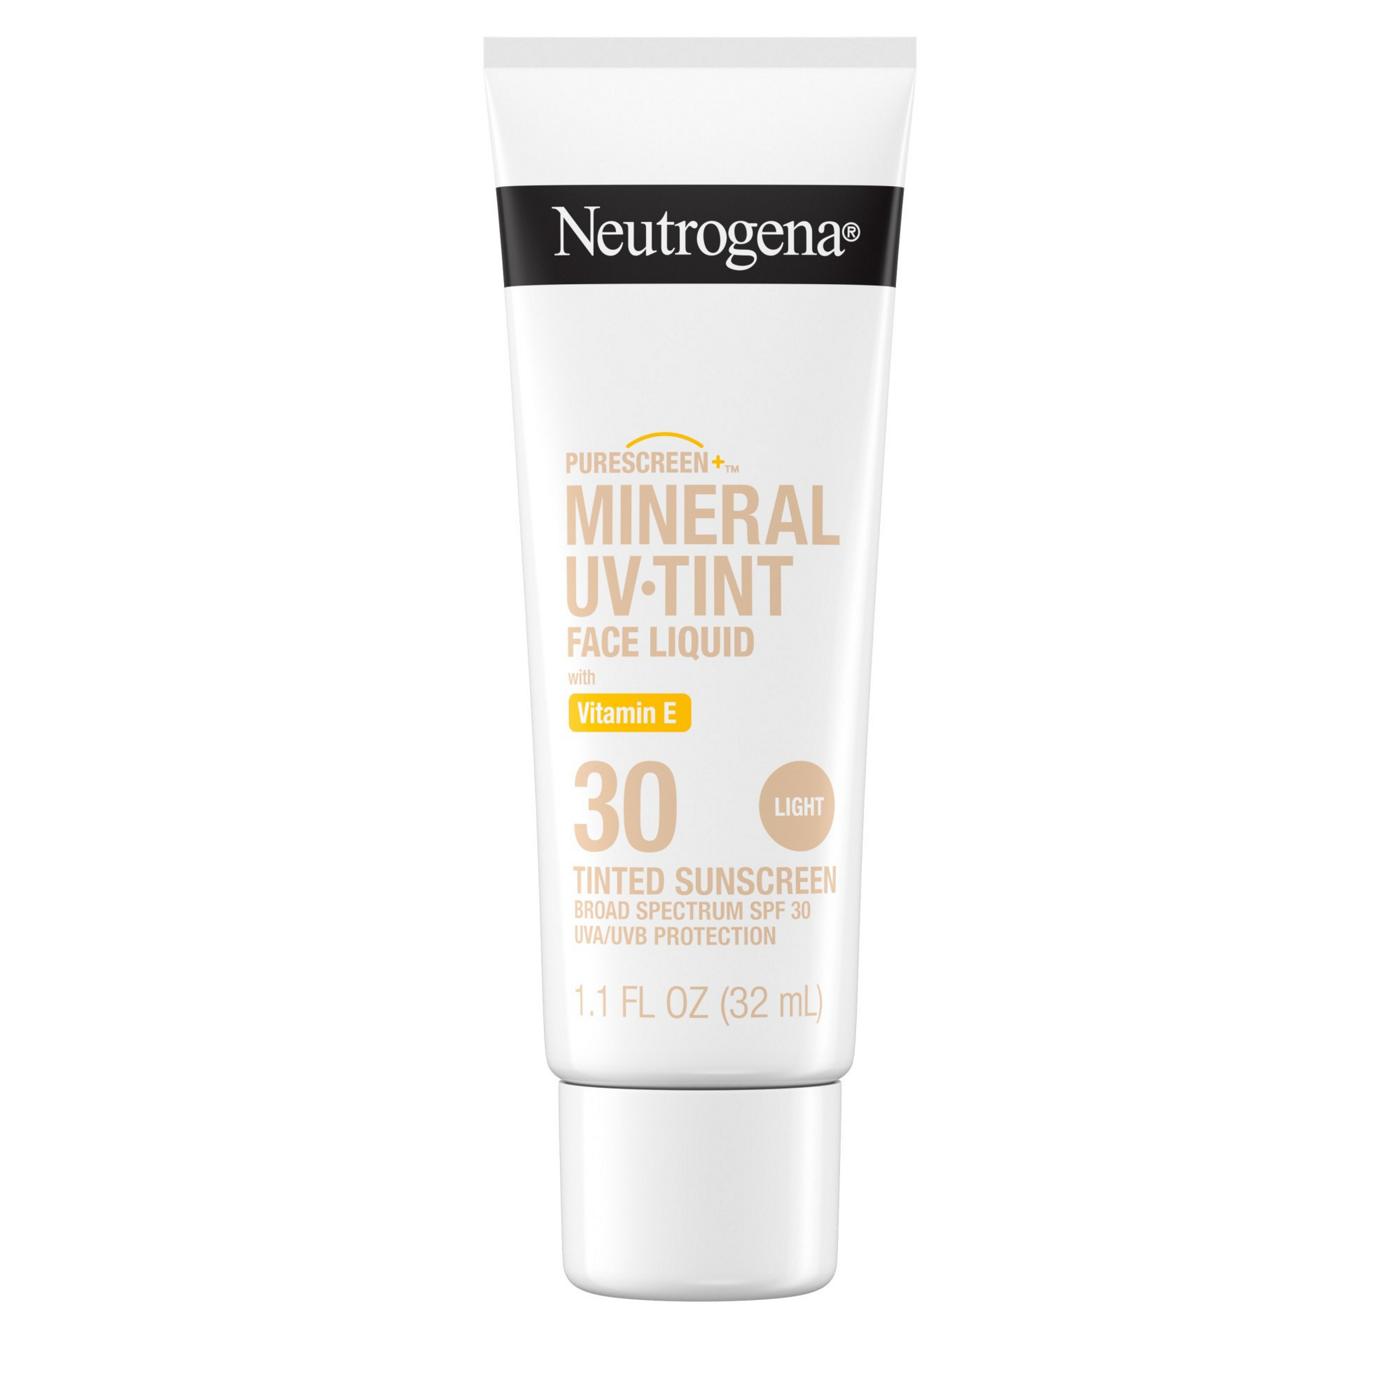 Neutrogena Purescreen+ Mineral UV Tinted Sunscreen SPF 30 - Light; image 2 of 8